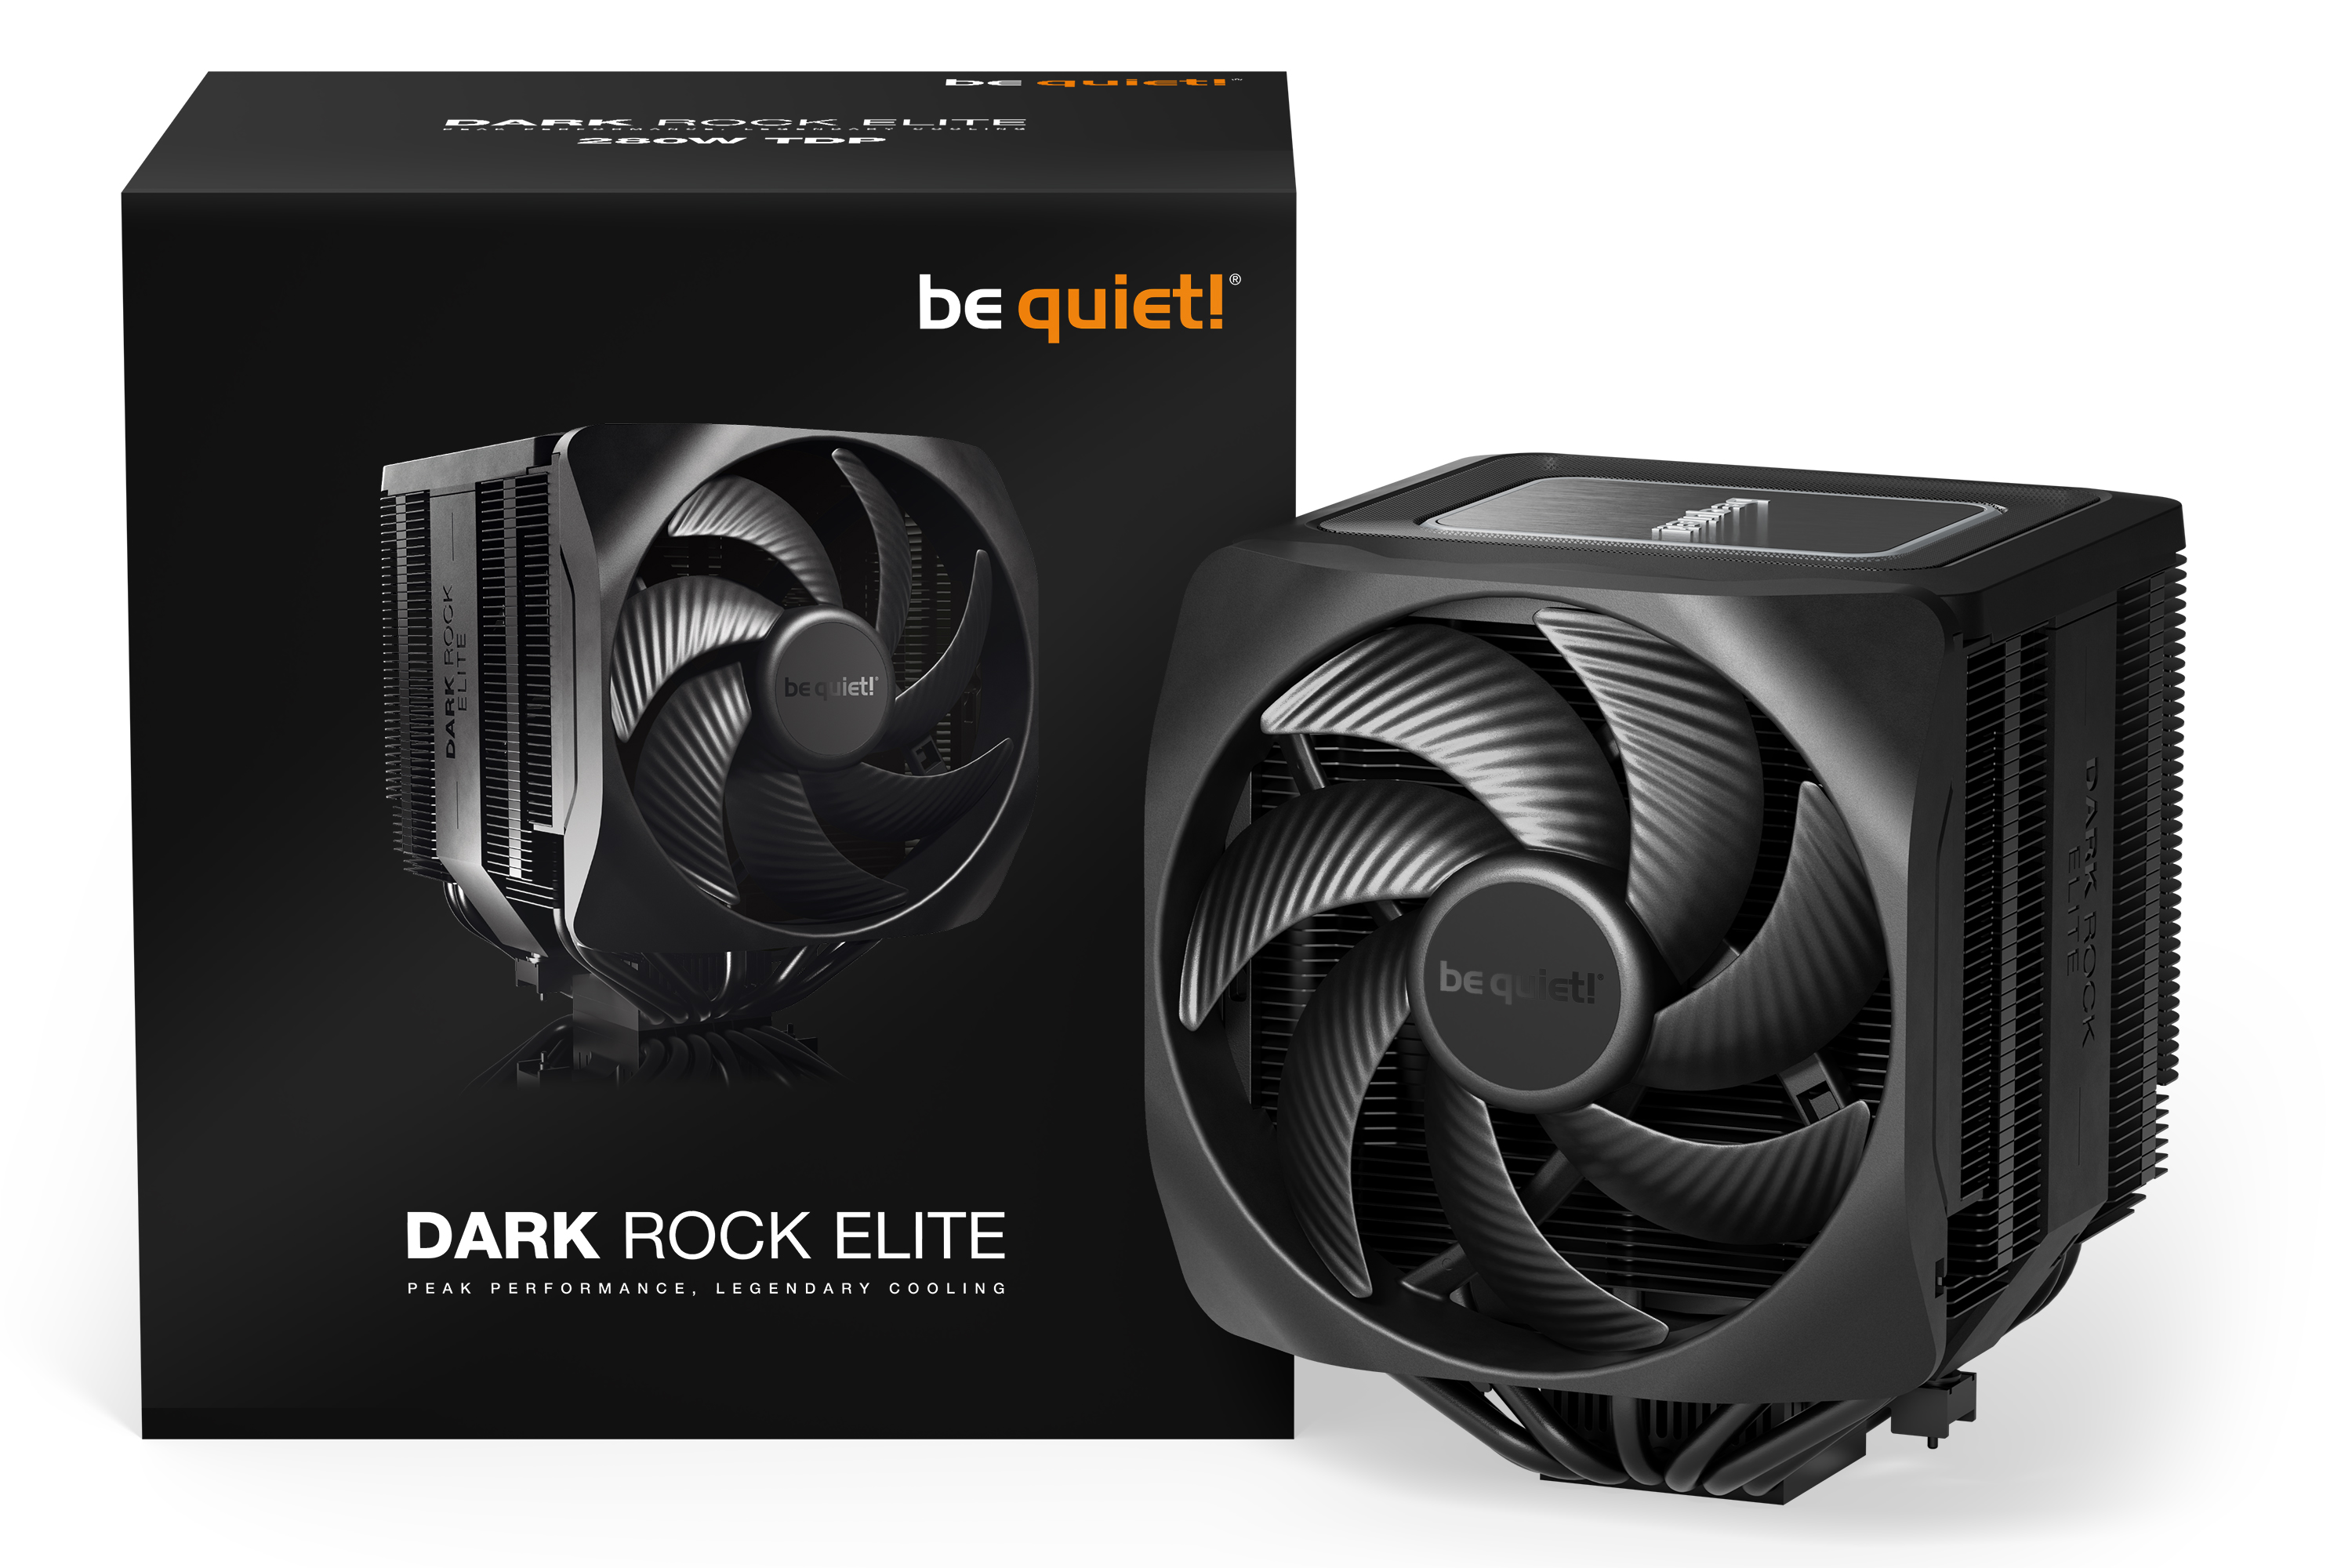 be quiet!: the new Dark Rock Pro 5 and Dark Rock Elite announced